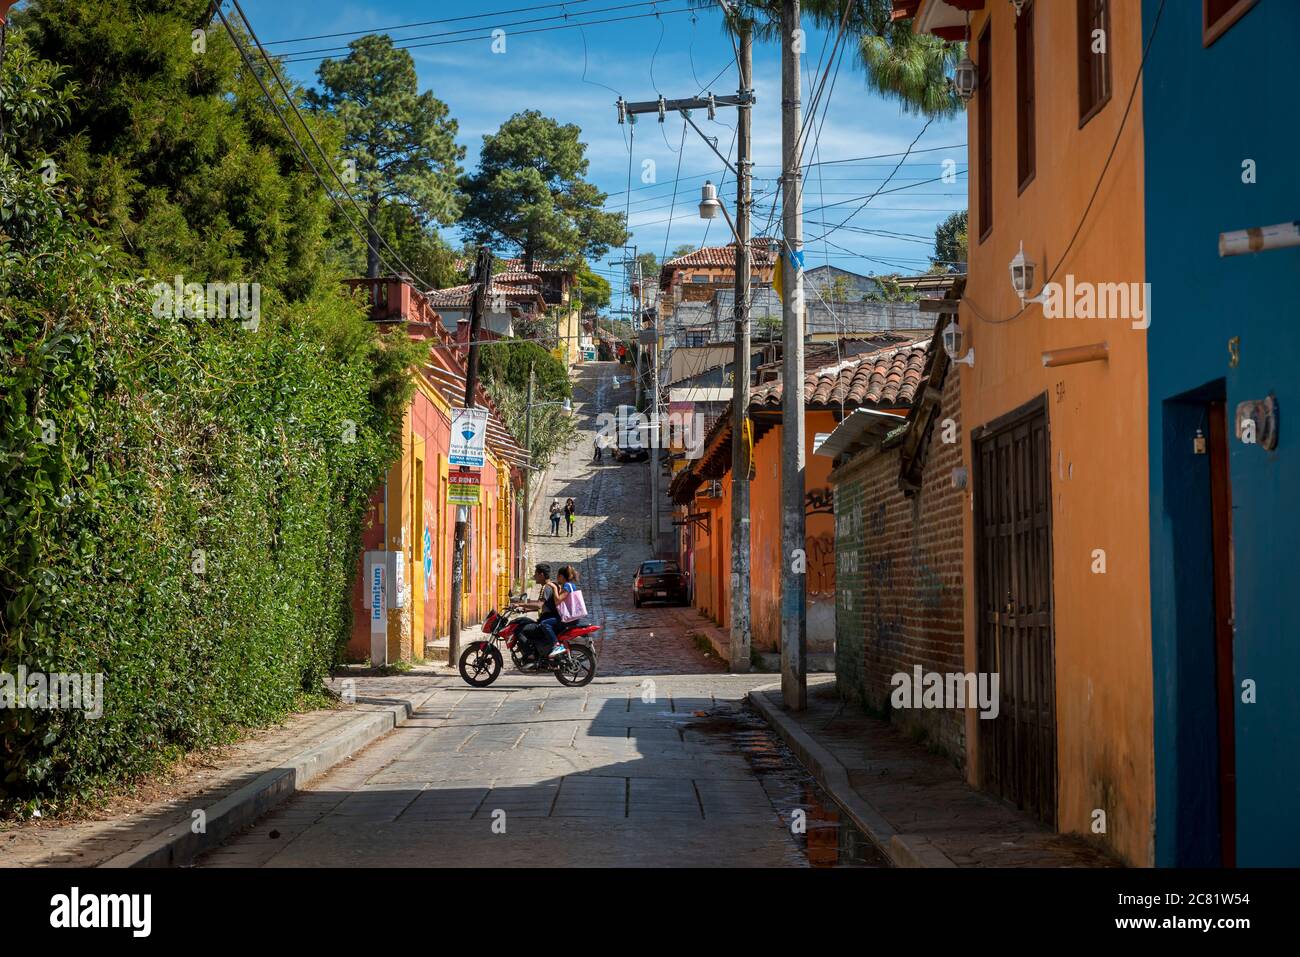 Motorbike in the street in the historic quarter of San Cristobal de las Casas; San Cristobal de las Casas, Chiapas, Mexico Stock Photo